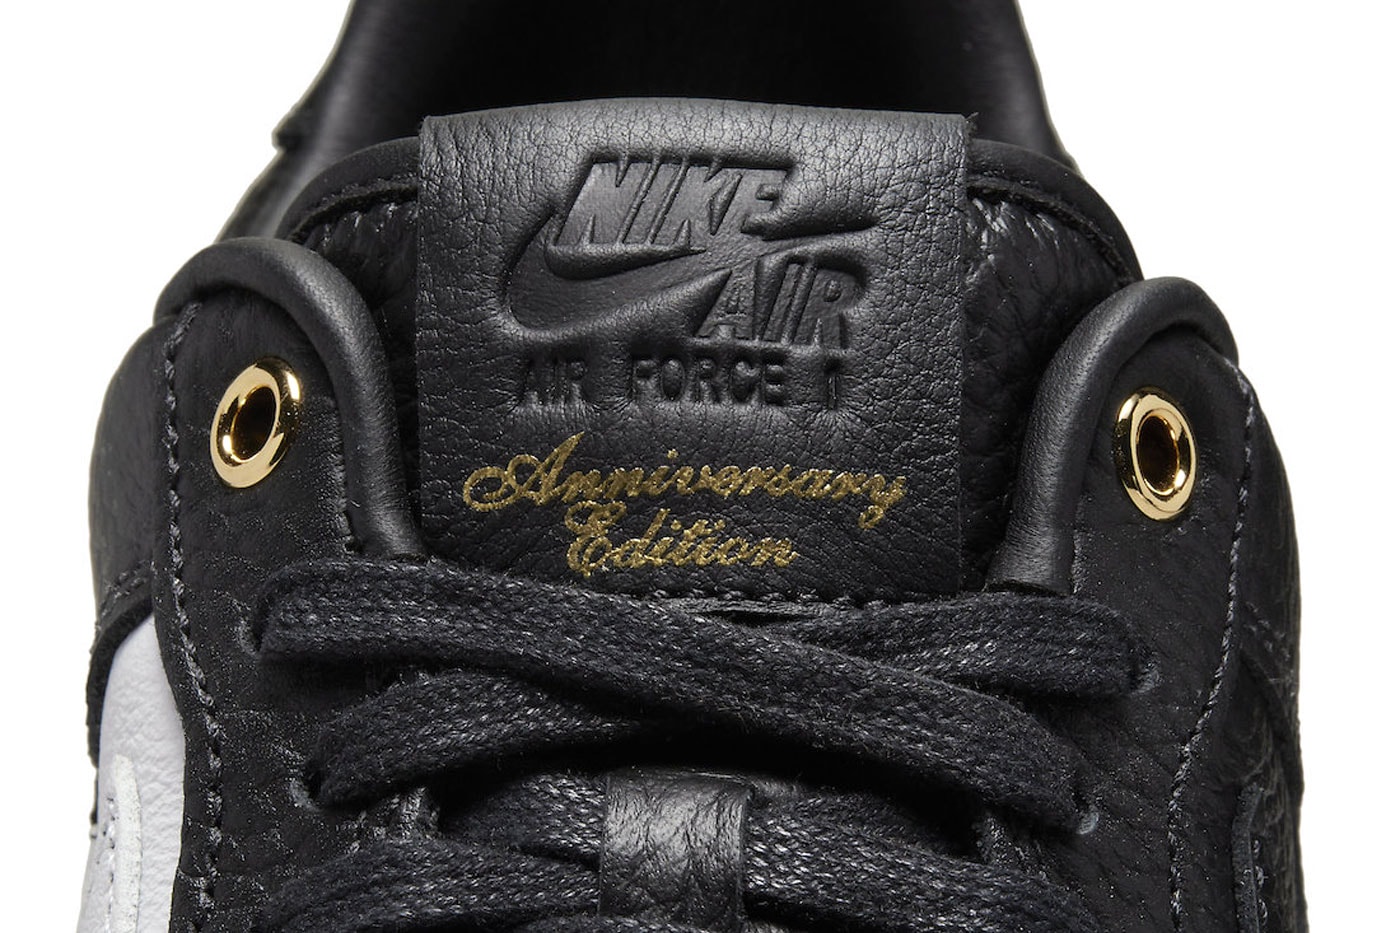 Nike Air Force 1 Anniversary Edition split dx6034 001 black white split gold release info date price